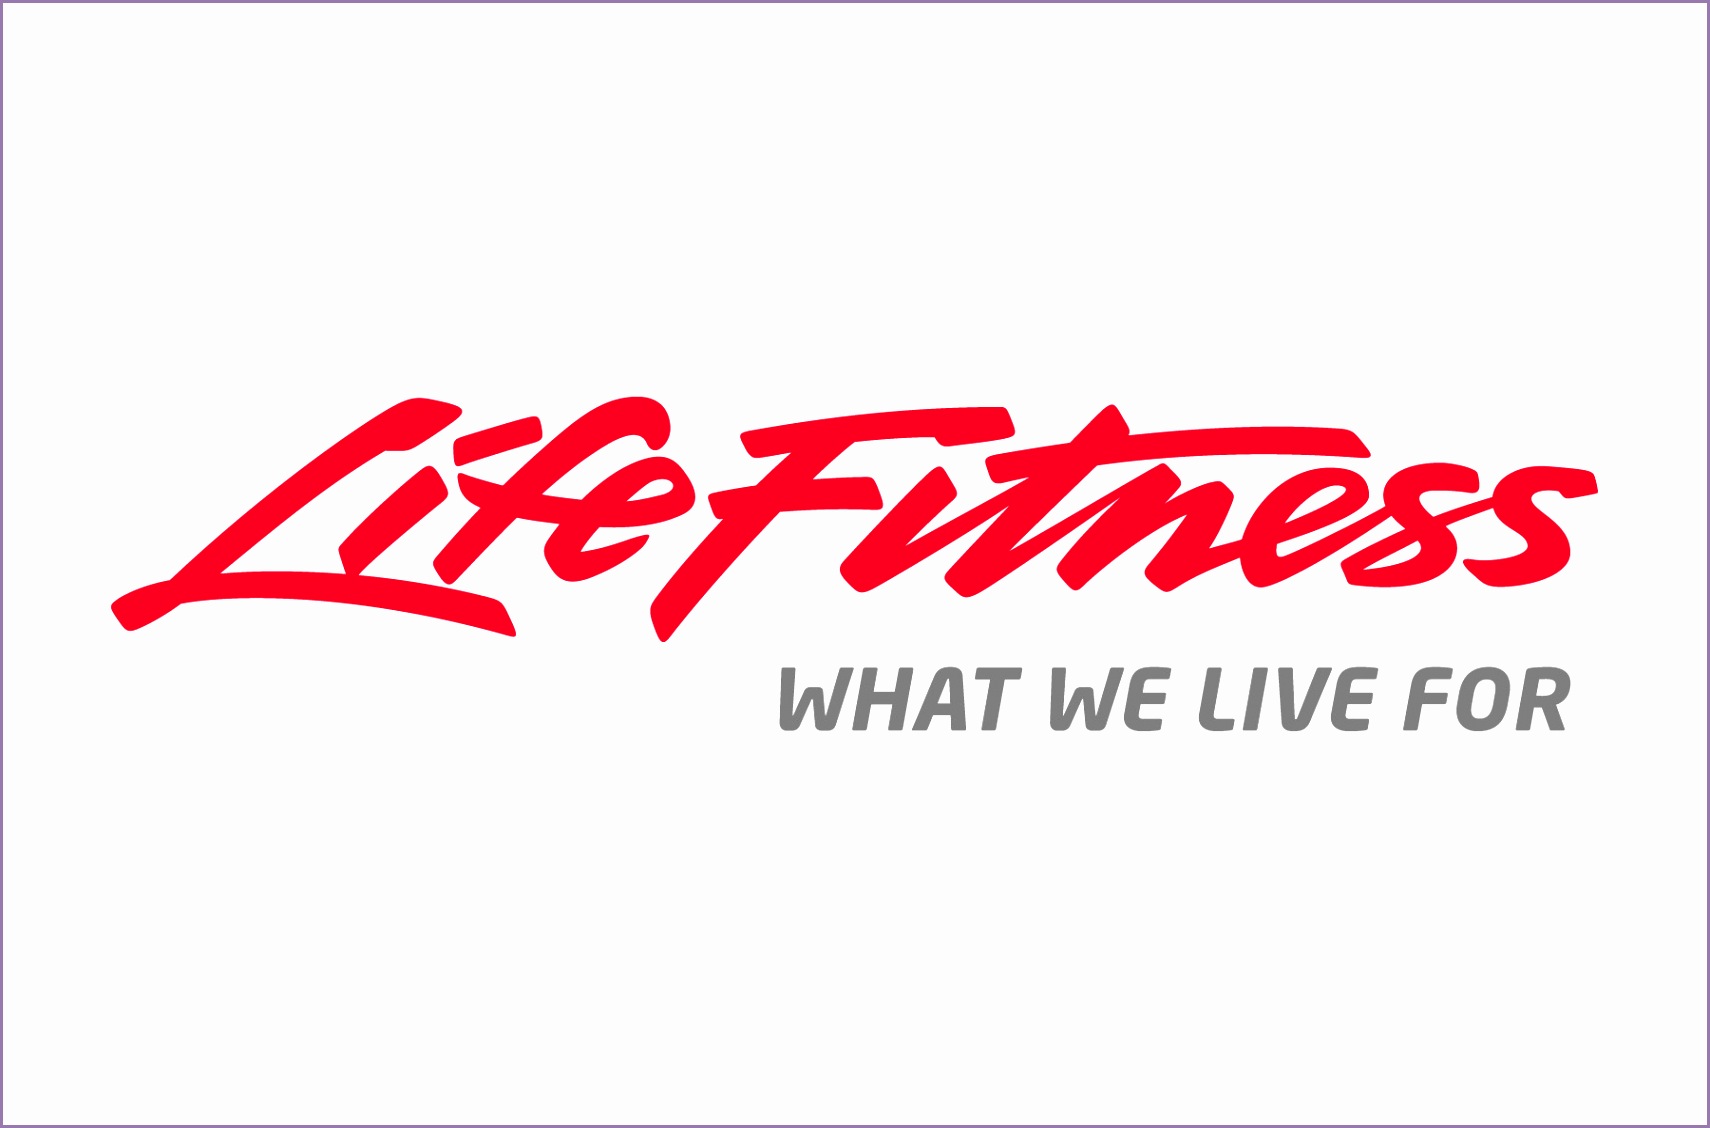 Life Fitness logo